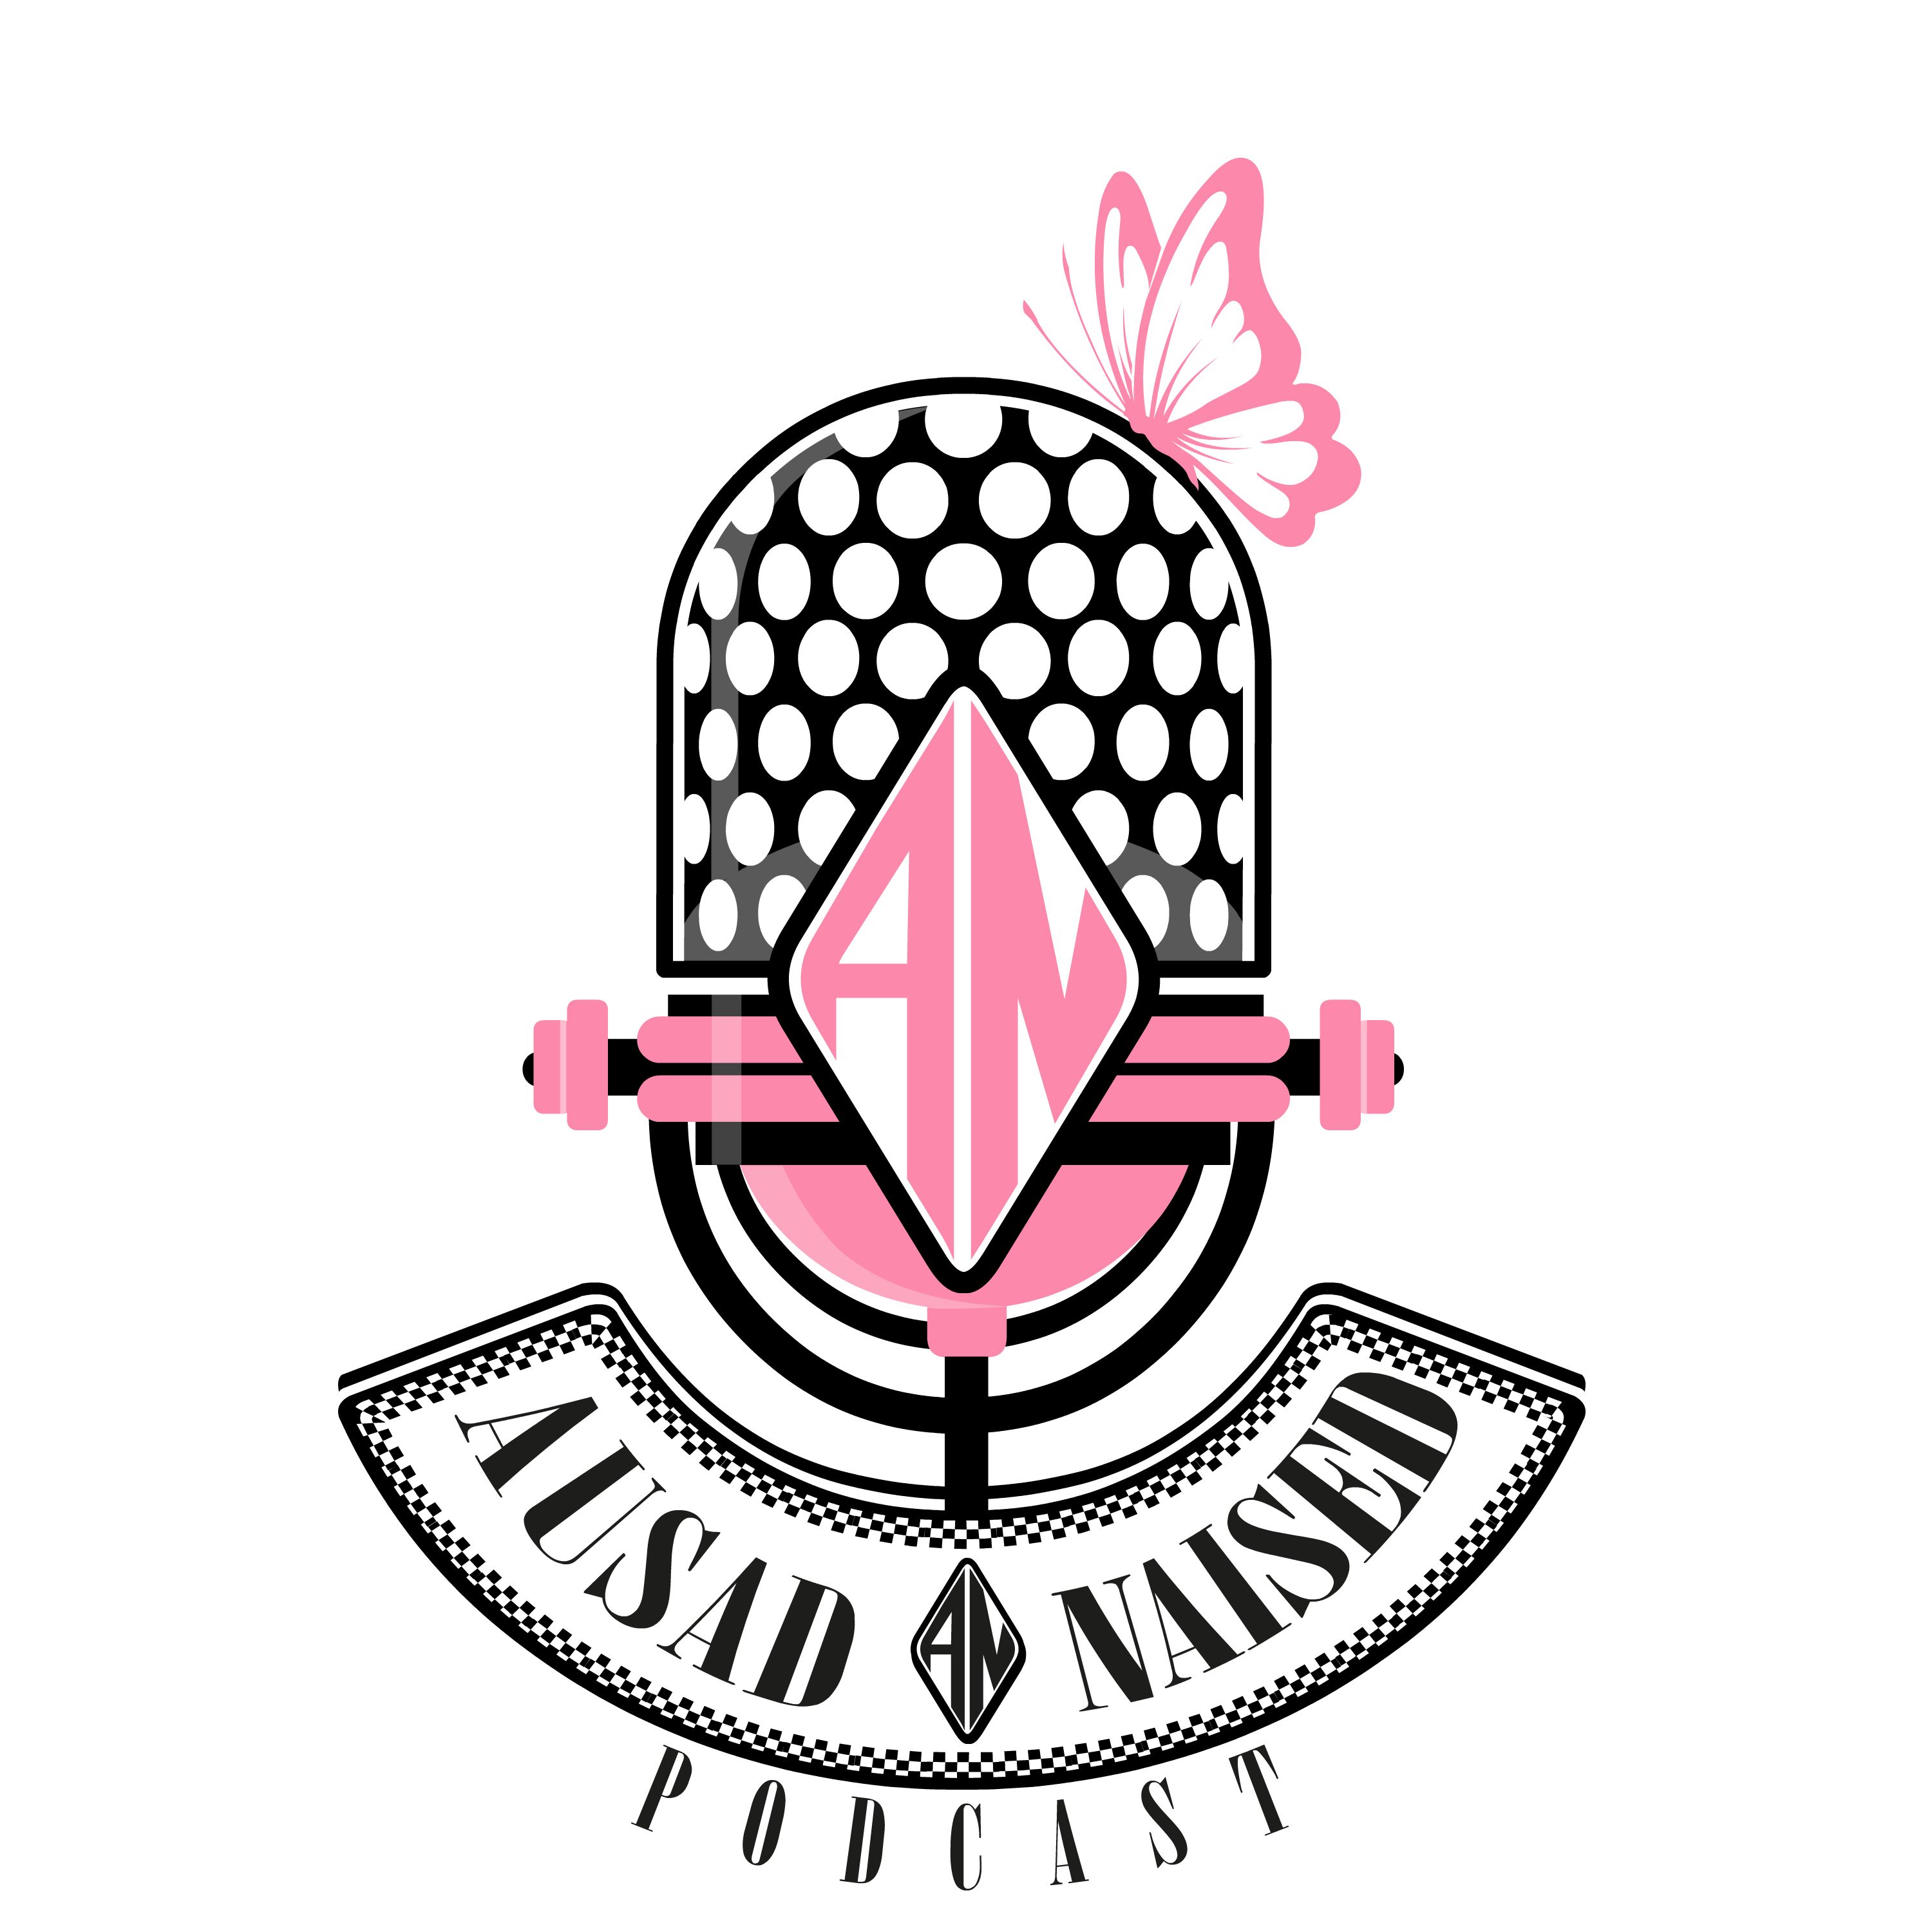 Podcast “Ausad naised”